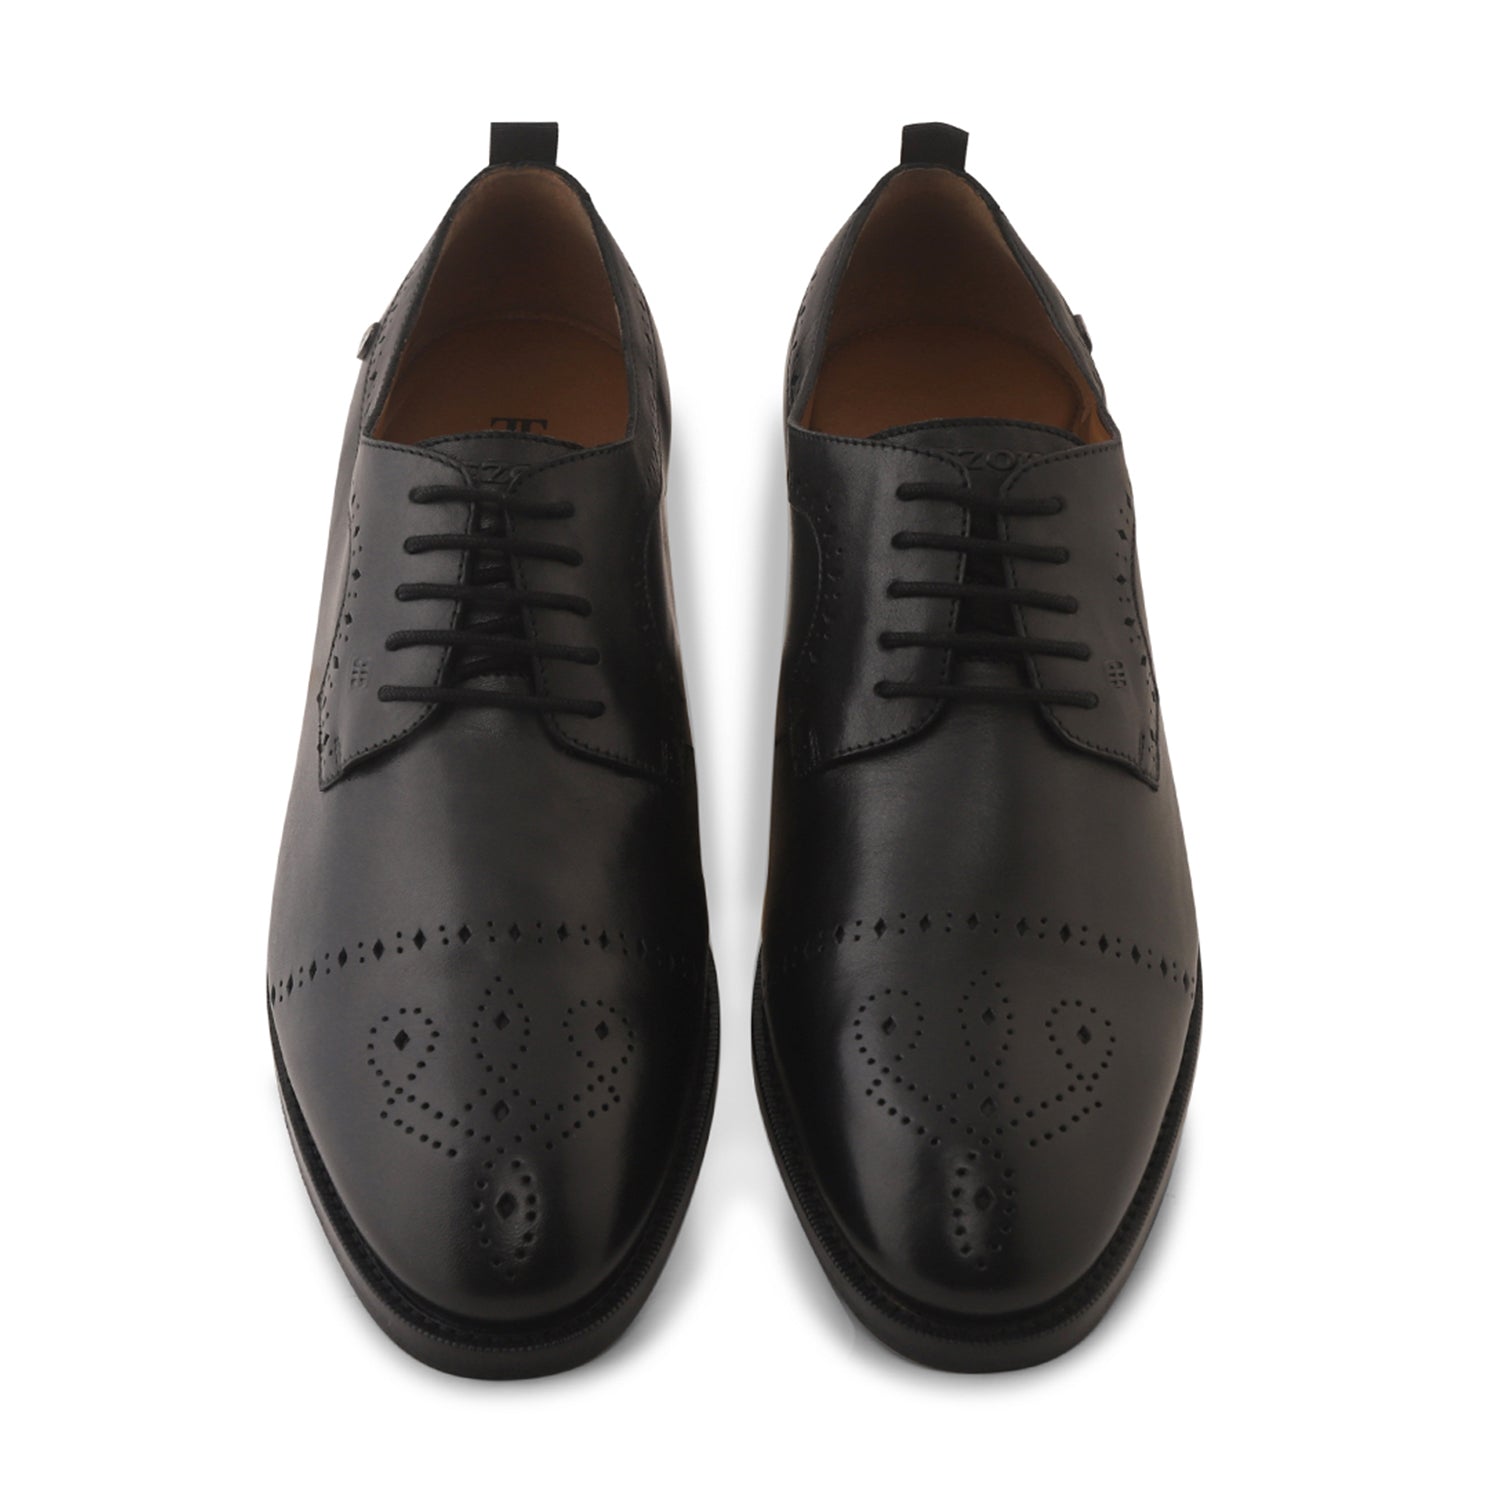 Ezok Men Black Burnish Finish Perforated Leather Derby Shoes